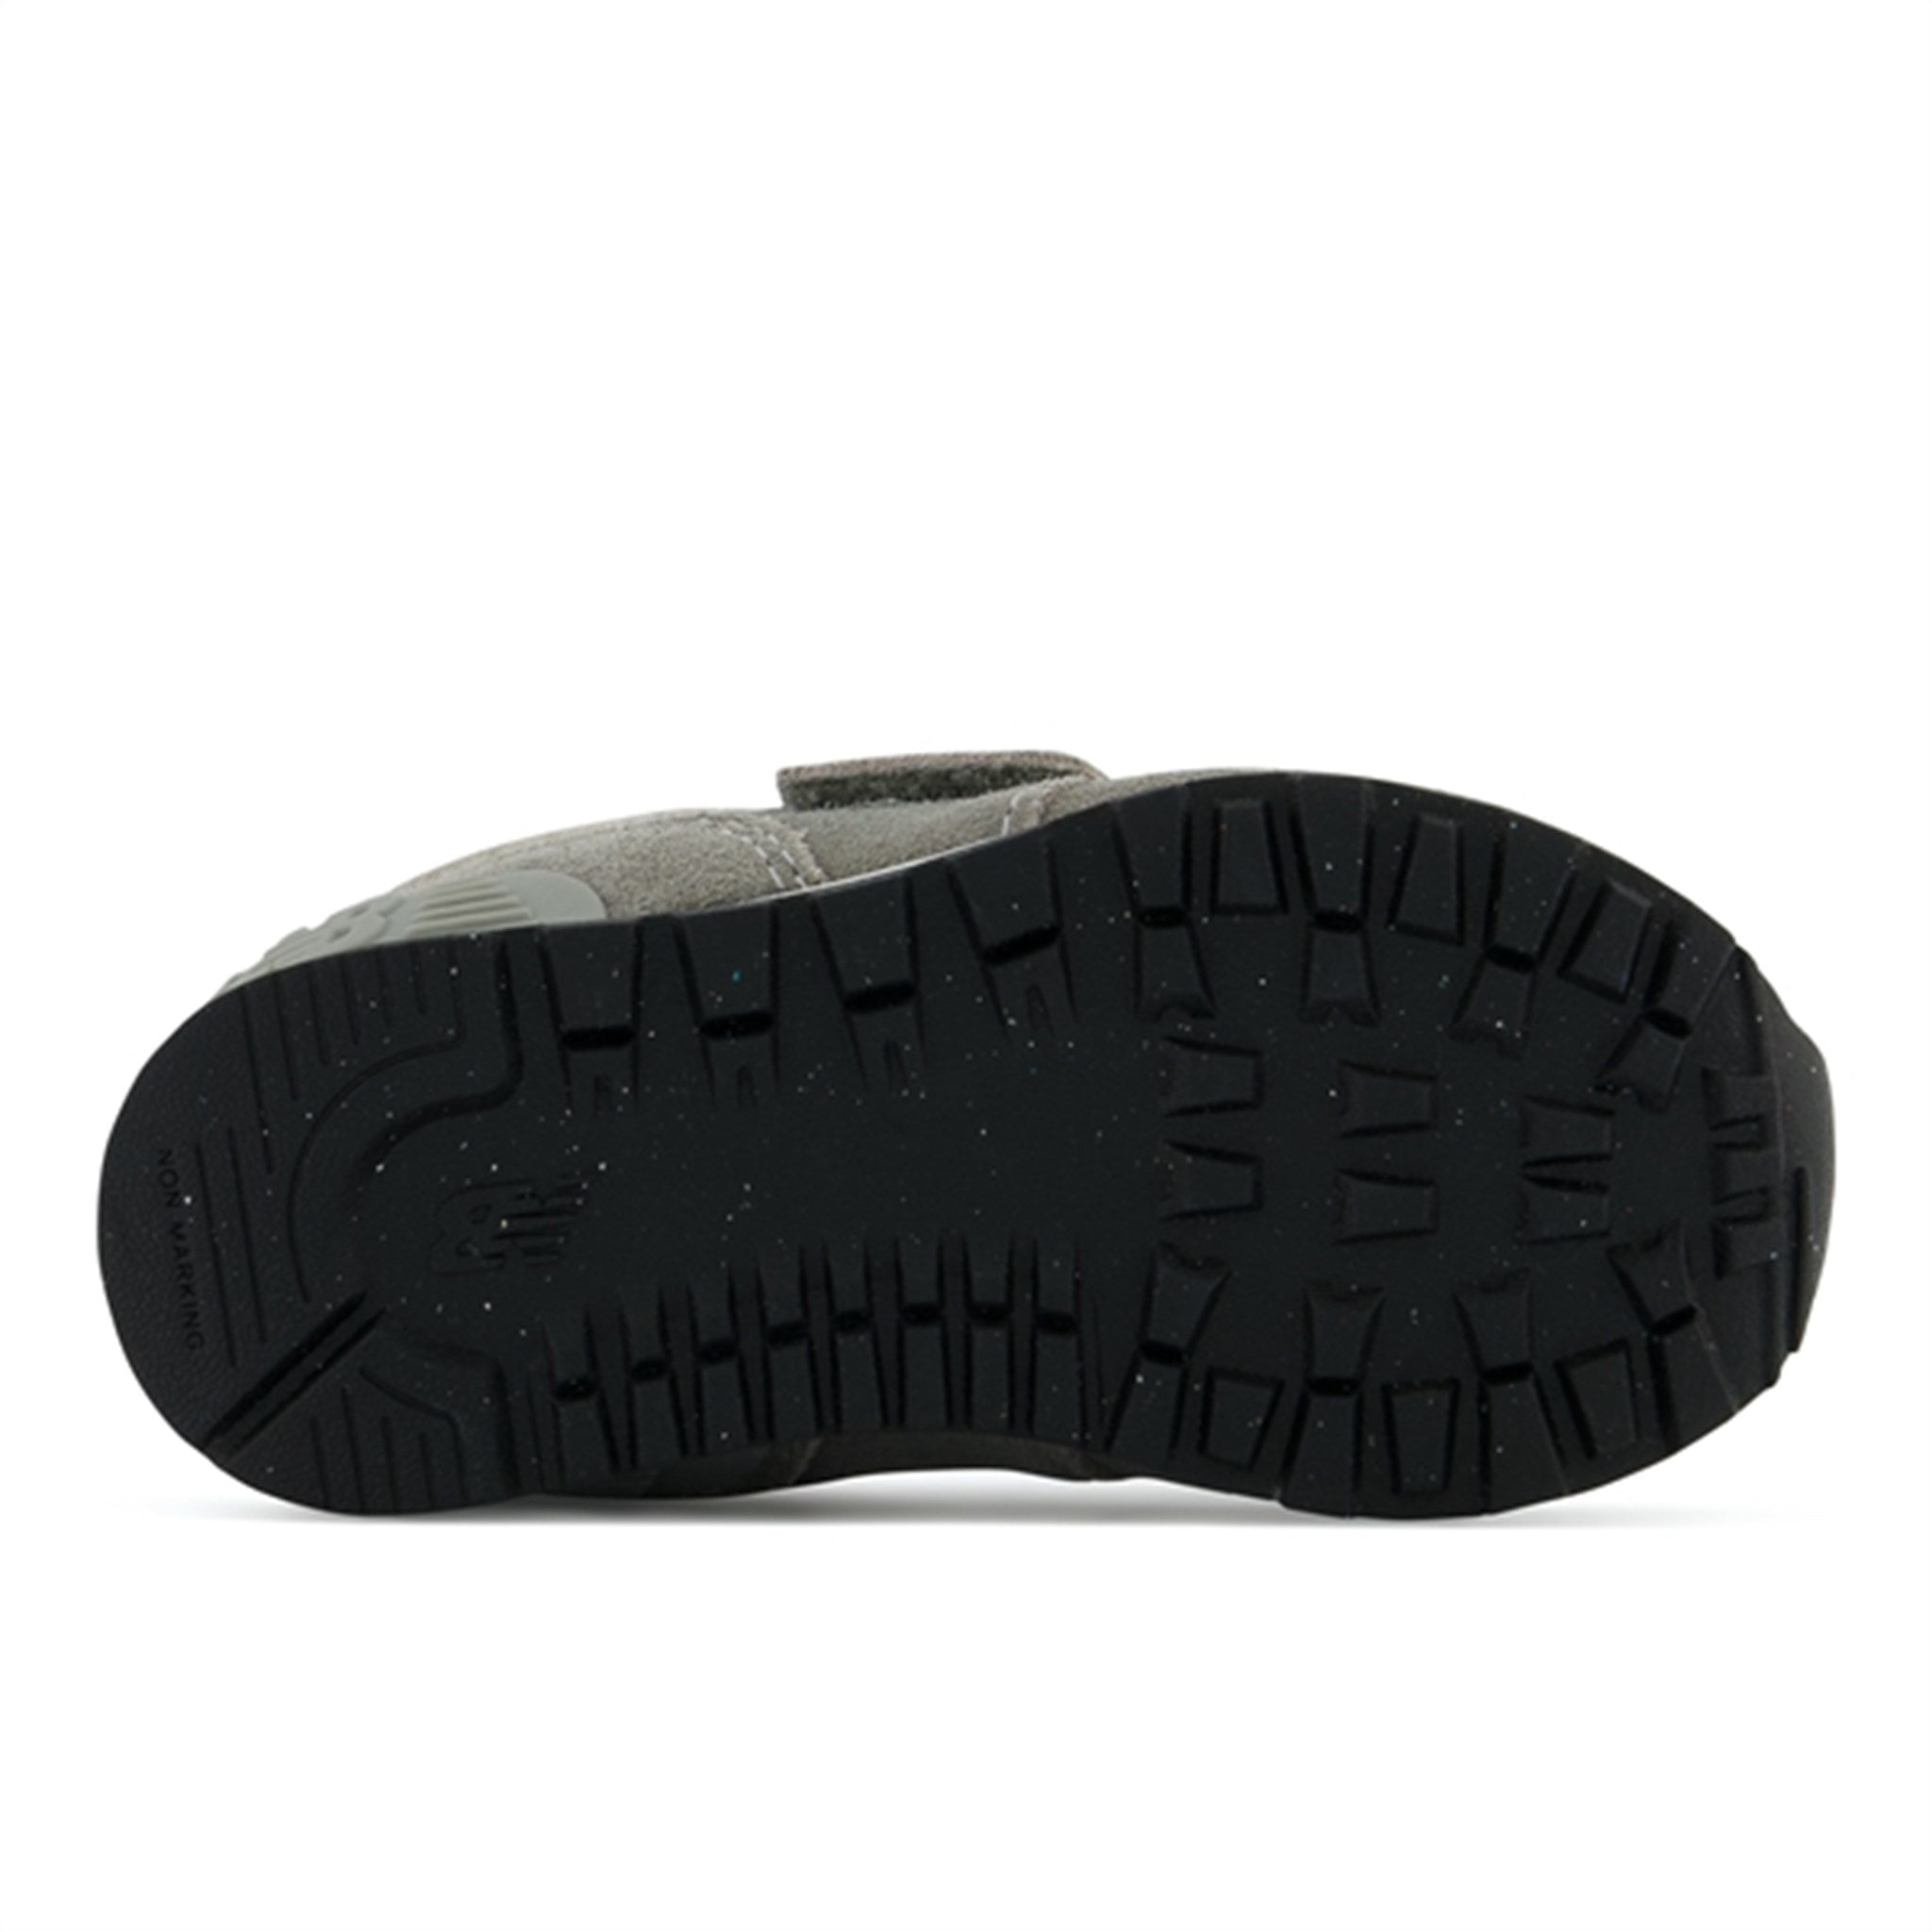 New Balance 574 Grey Sneakers 4